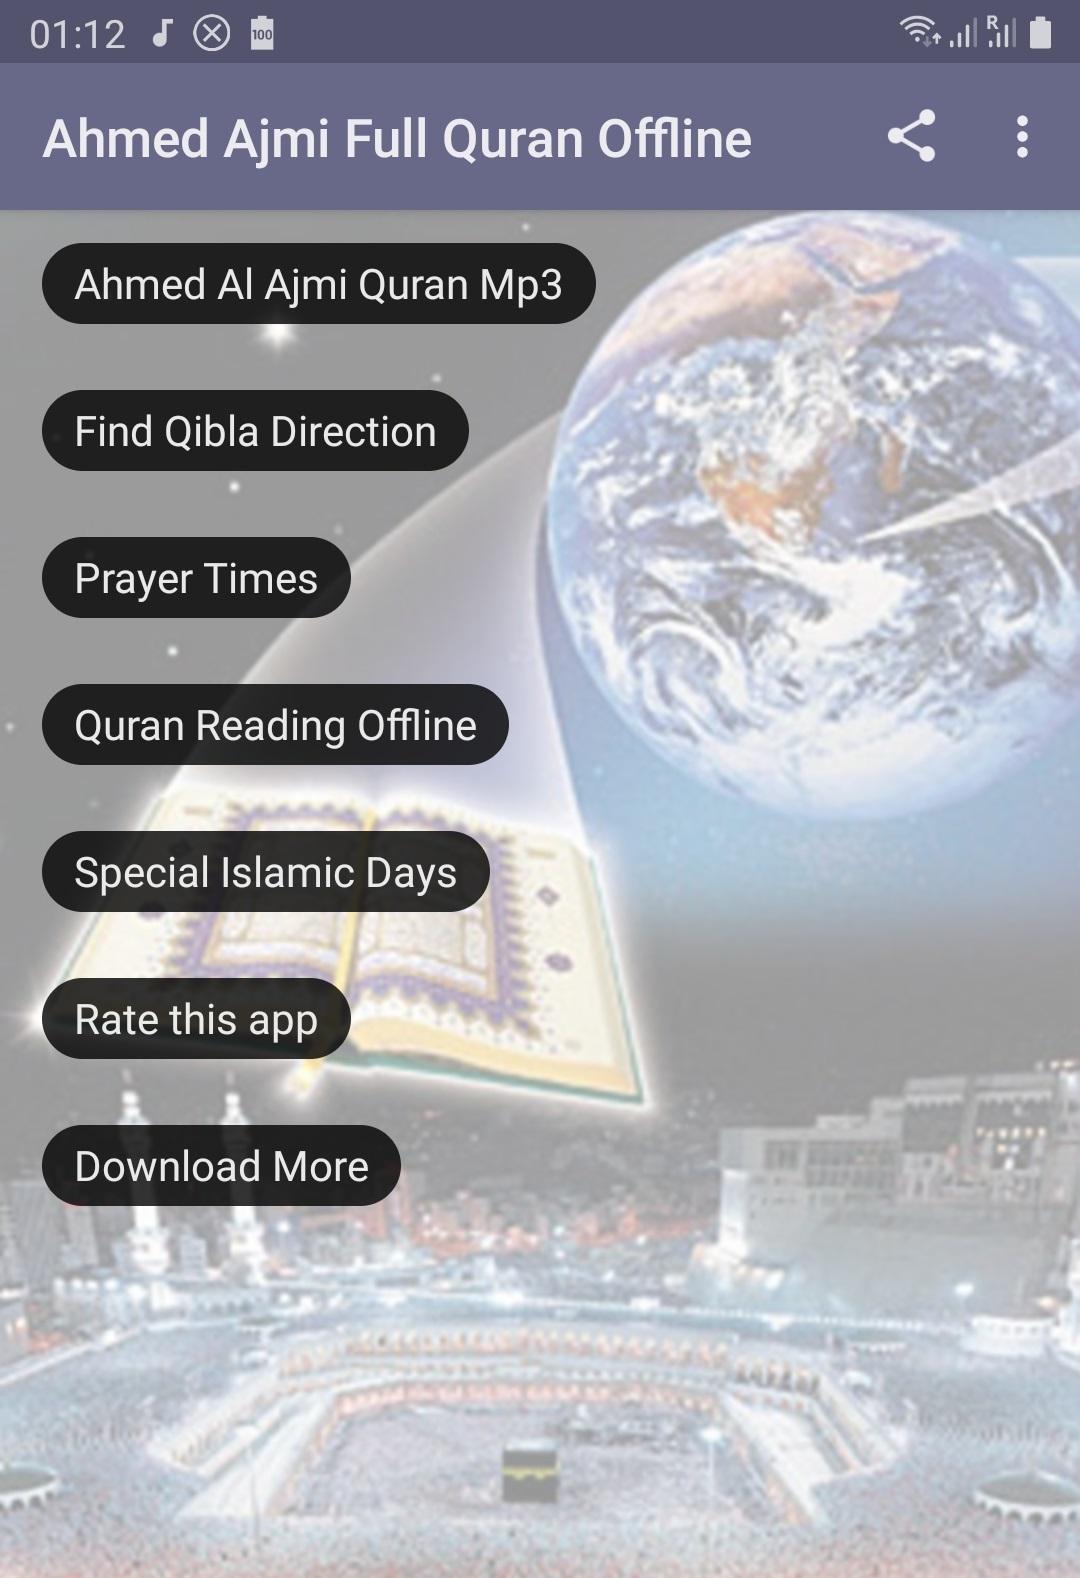 Ahmed Ajmi Full Quran Offline for Android - APK Download